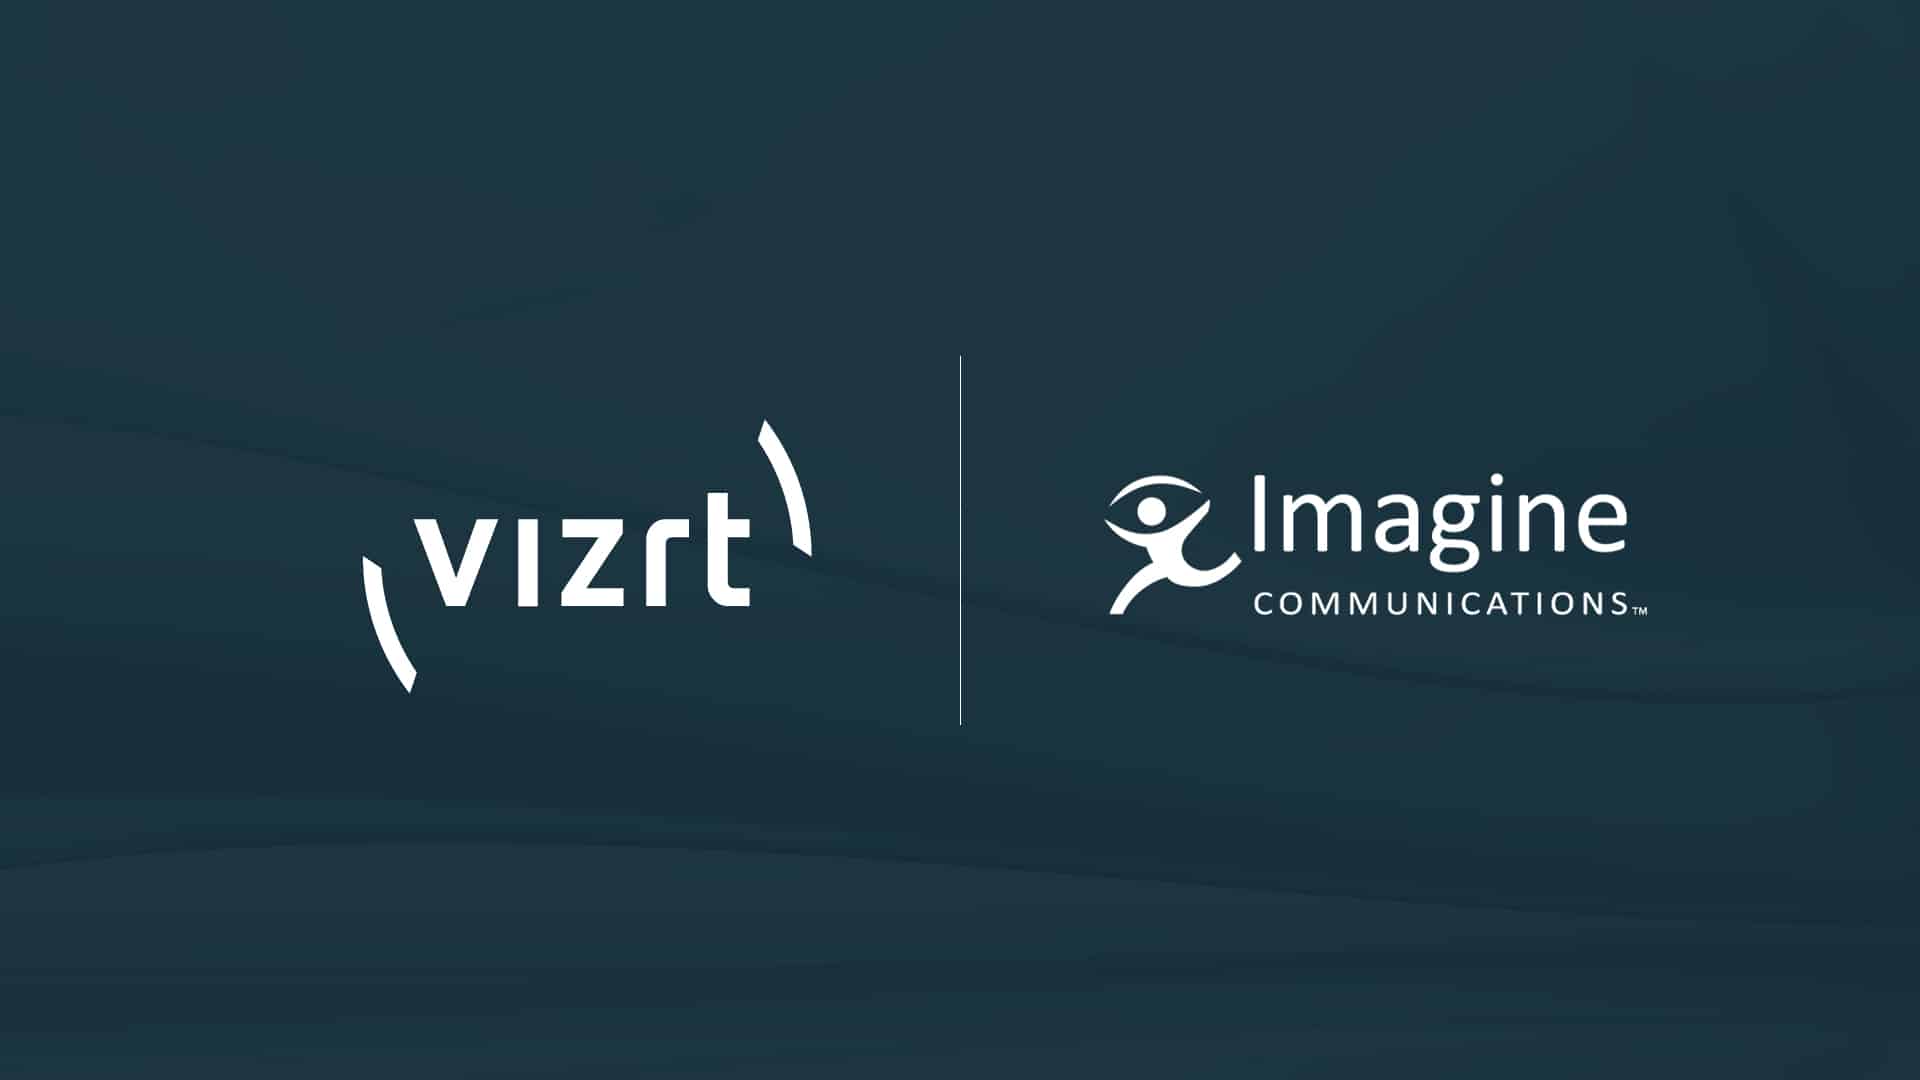 Logo salad - Vizrt and Imagine Communications